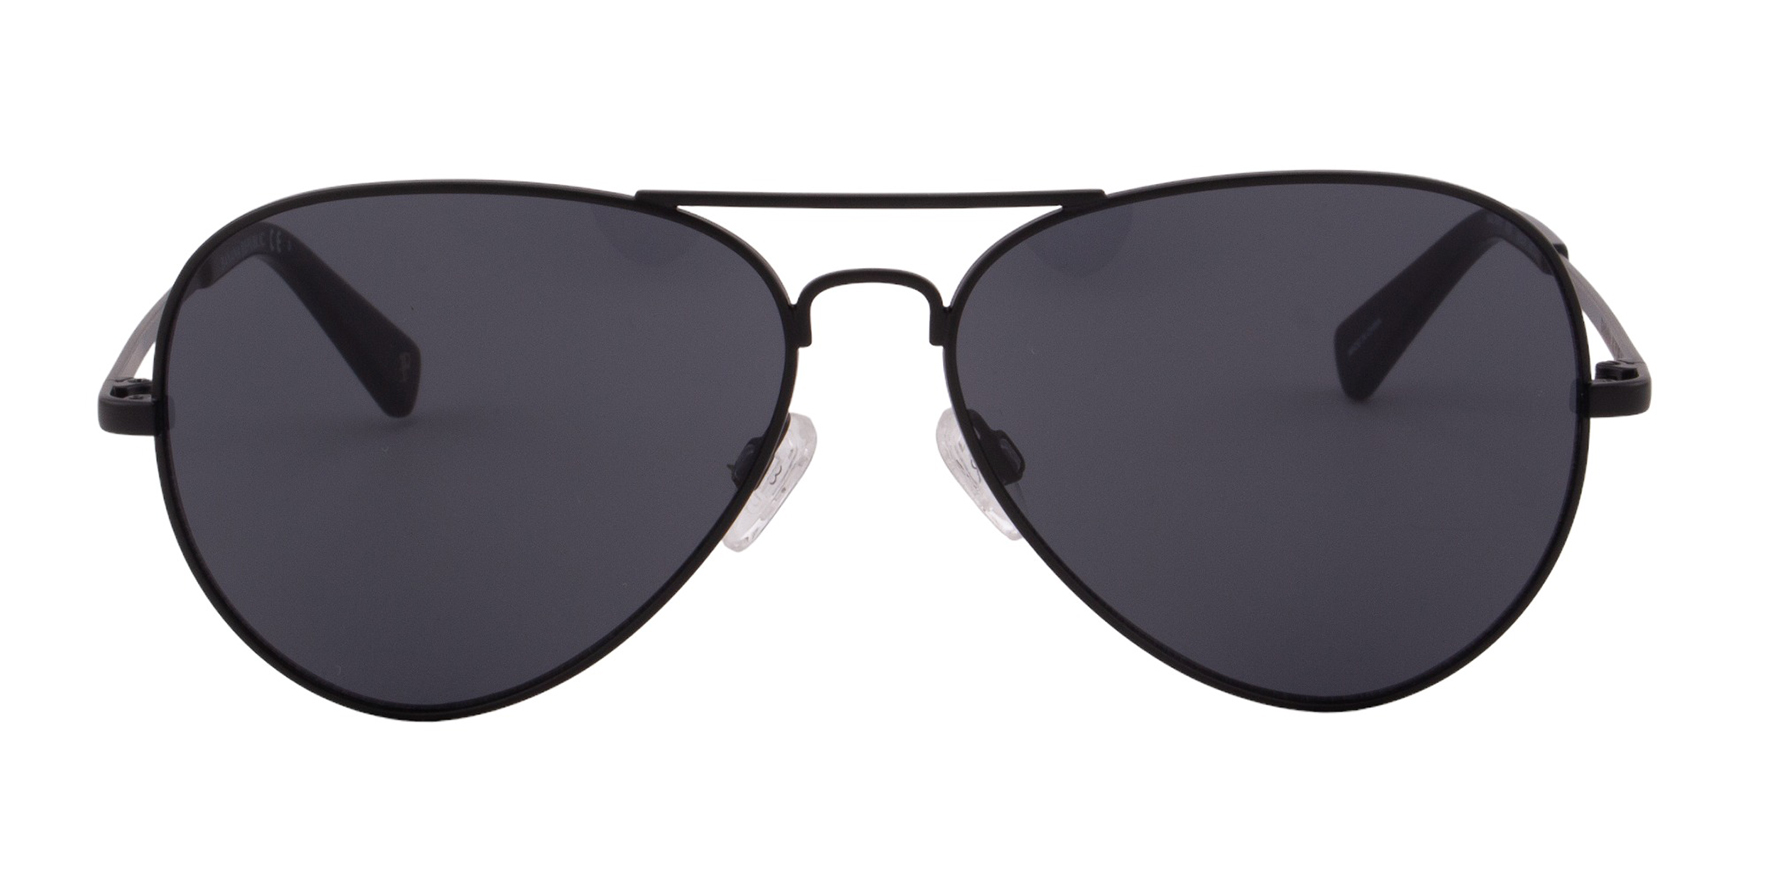 Sunglasses Komono Walter Otherworldly × Walter van Beirendonck |  Freshlabels.cz